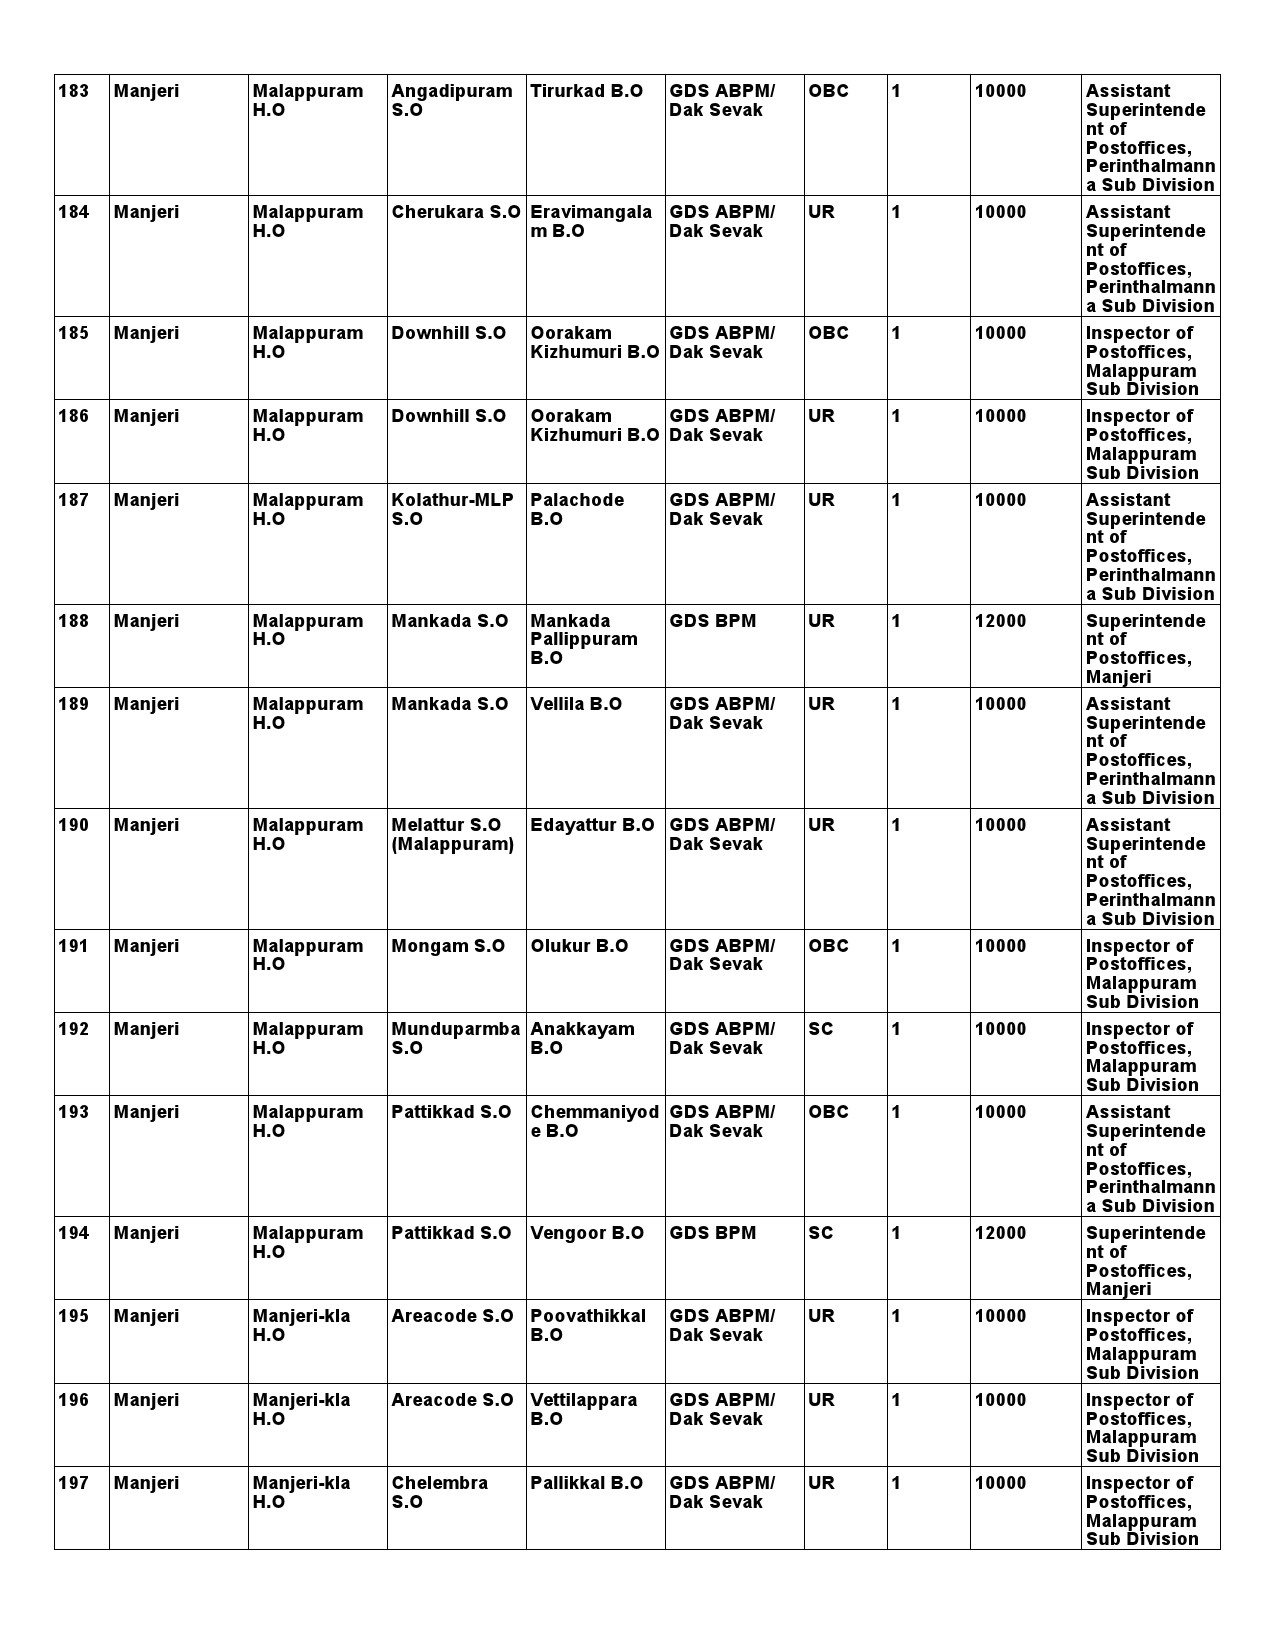 Kerala Postal Circle GDS Recruitment 2021 notification - Notification Image 29